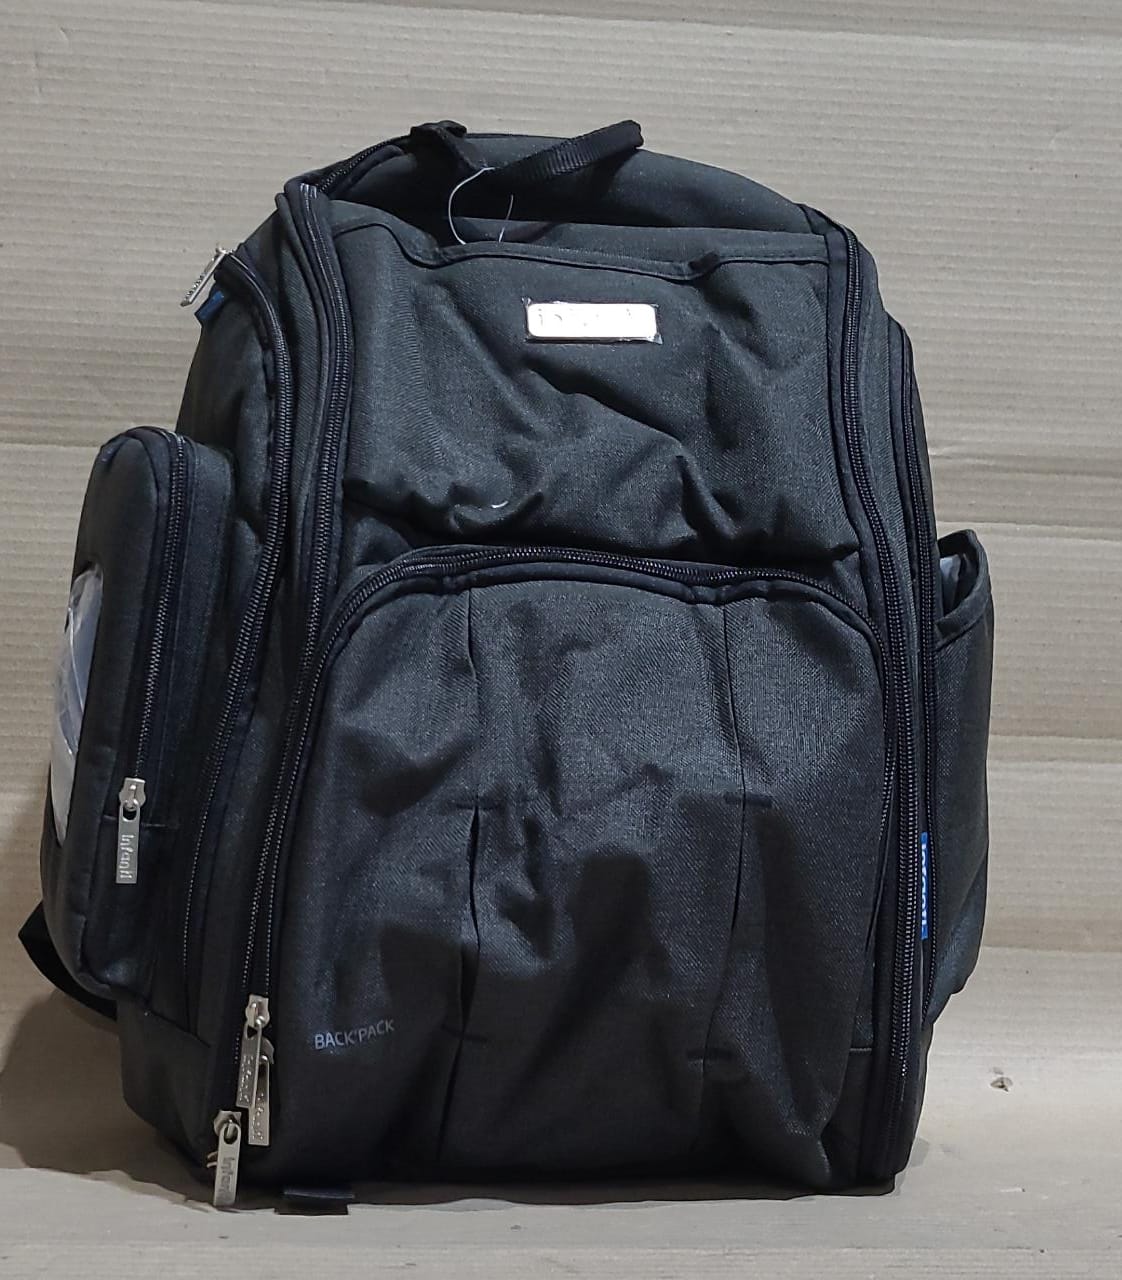 Mochila mudador backpack carbono infanti